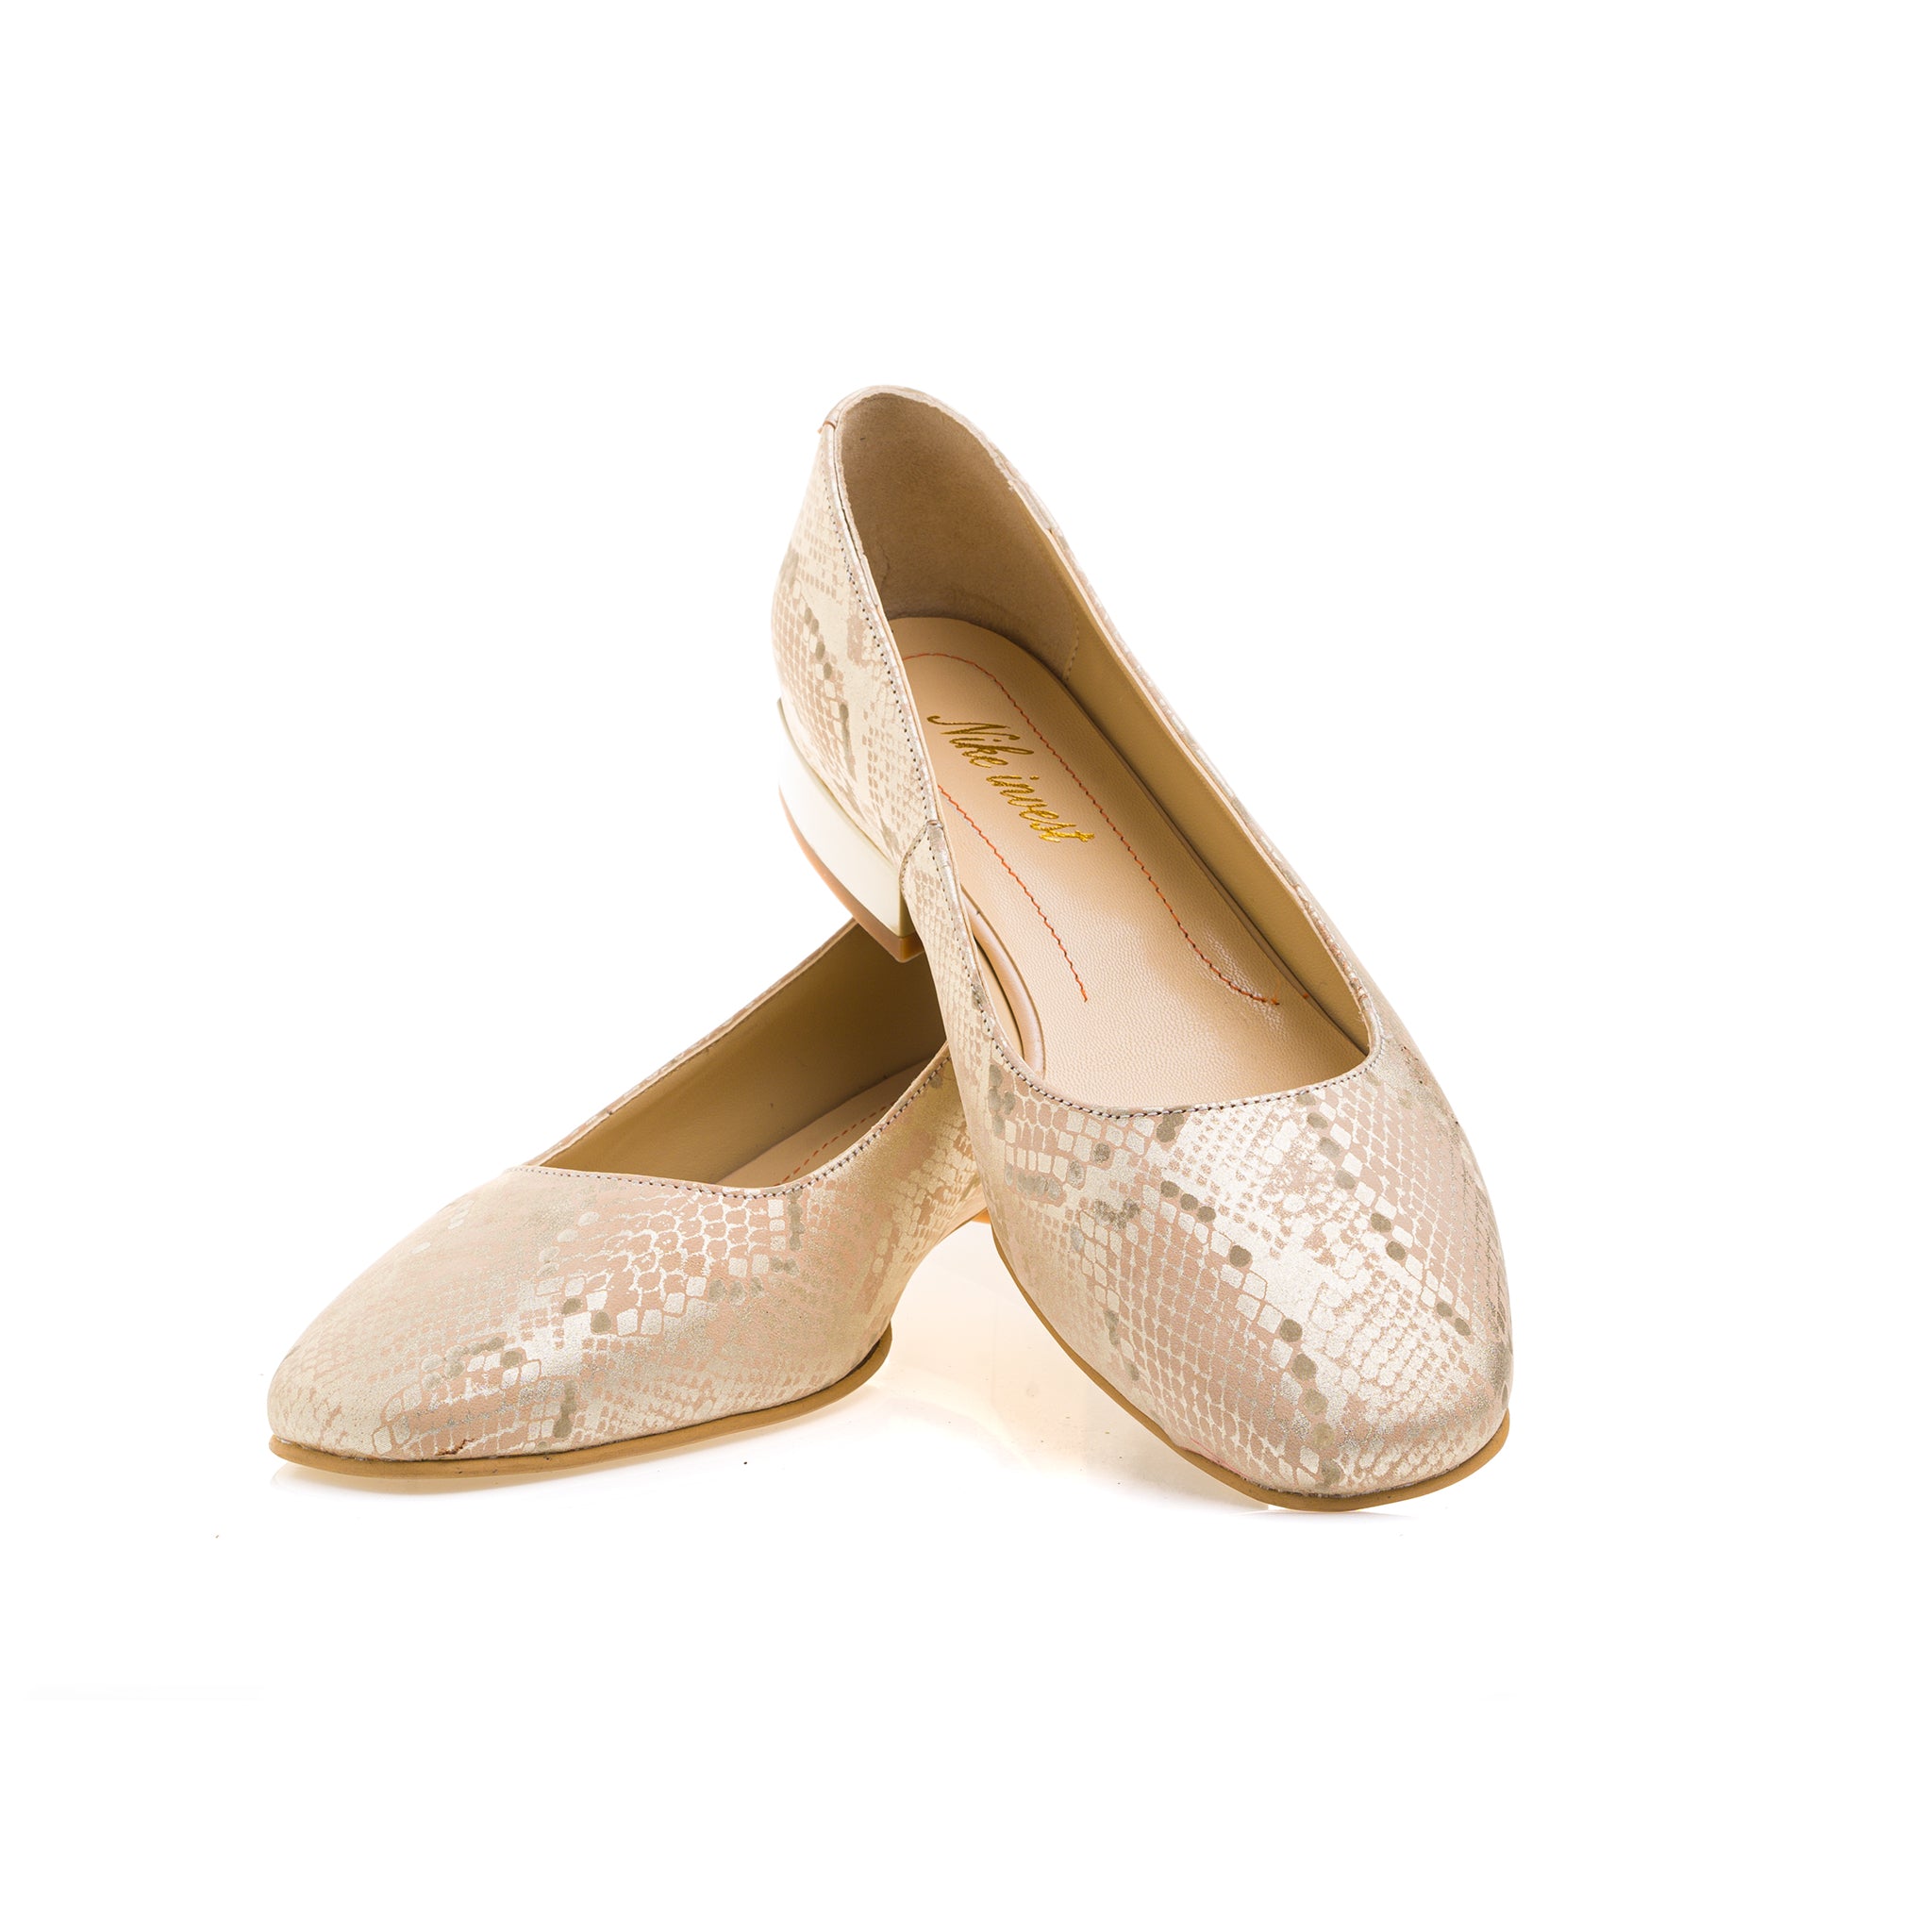 Pantofi Eleganti Dama din piele Naturala,Carin,aurii